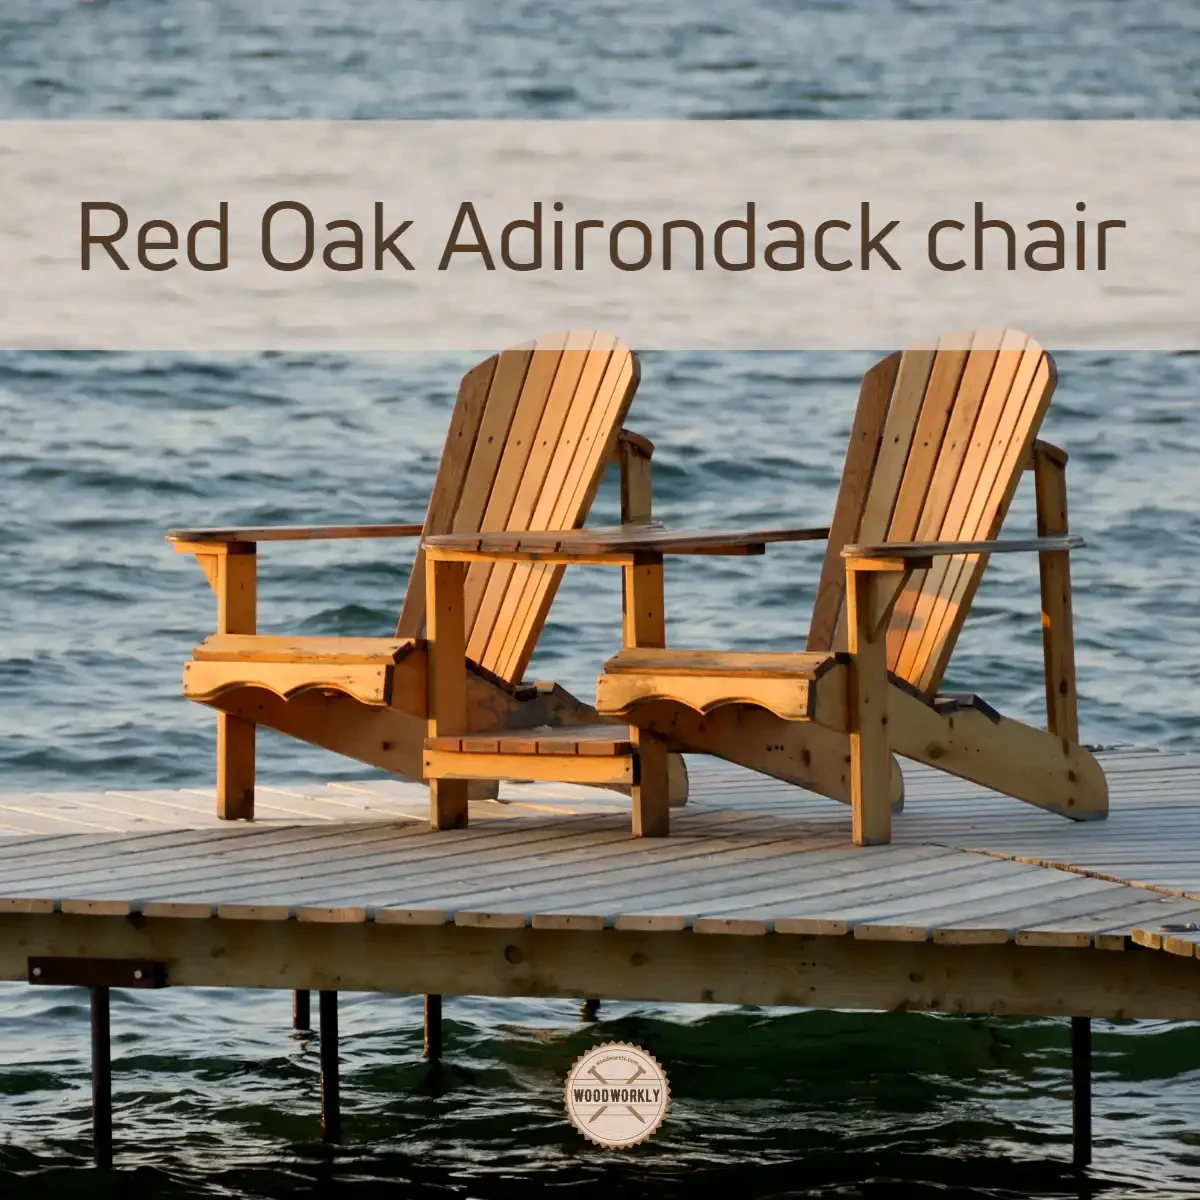 Red Oak Adirondack chair